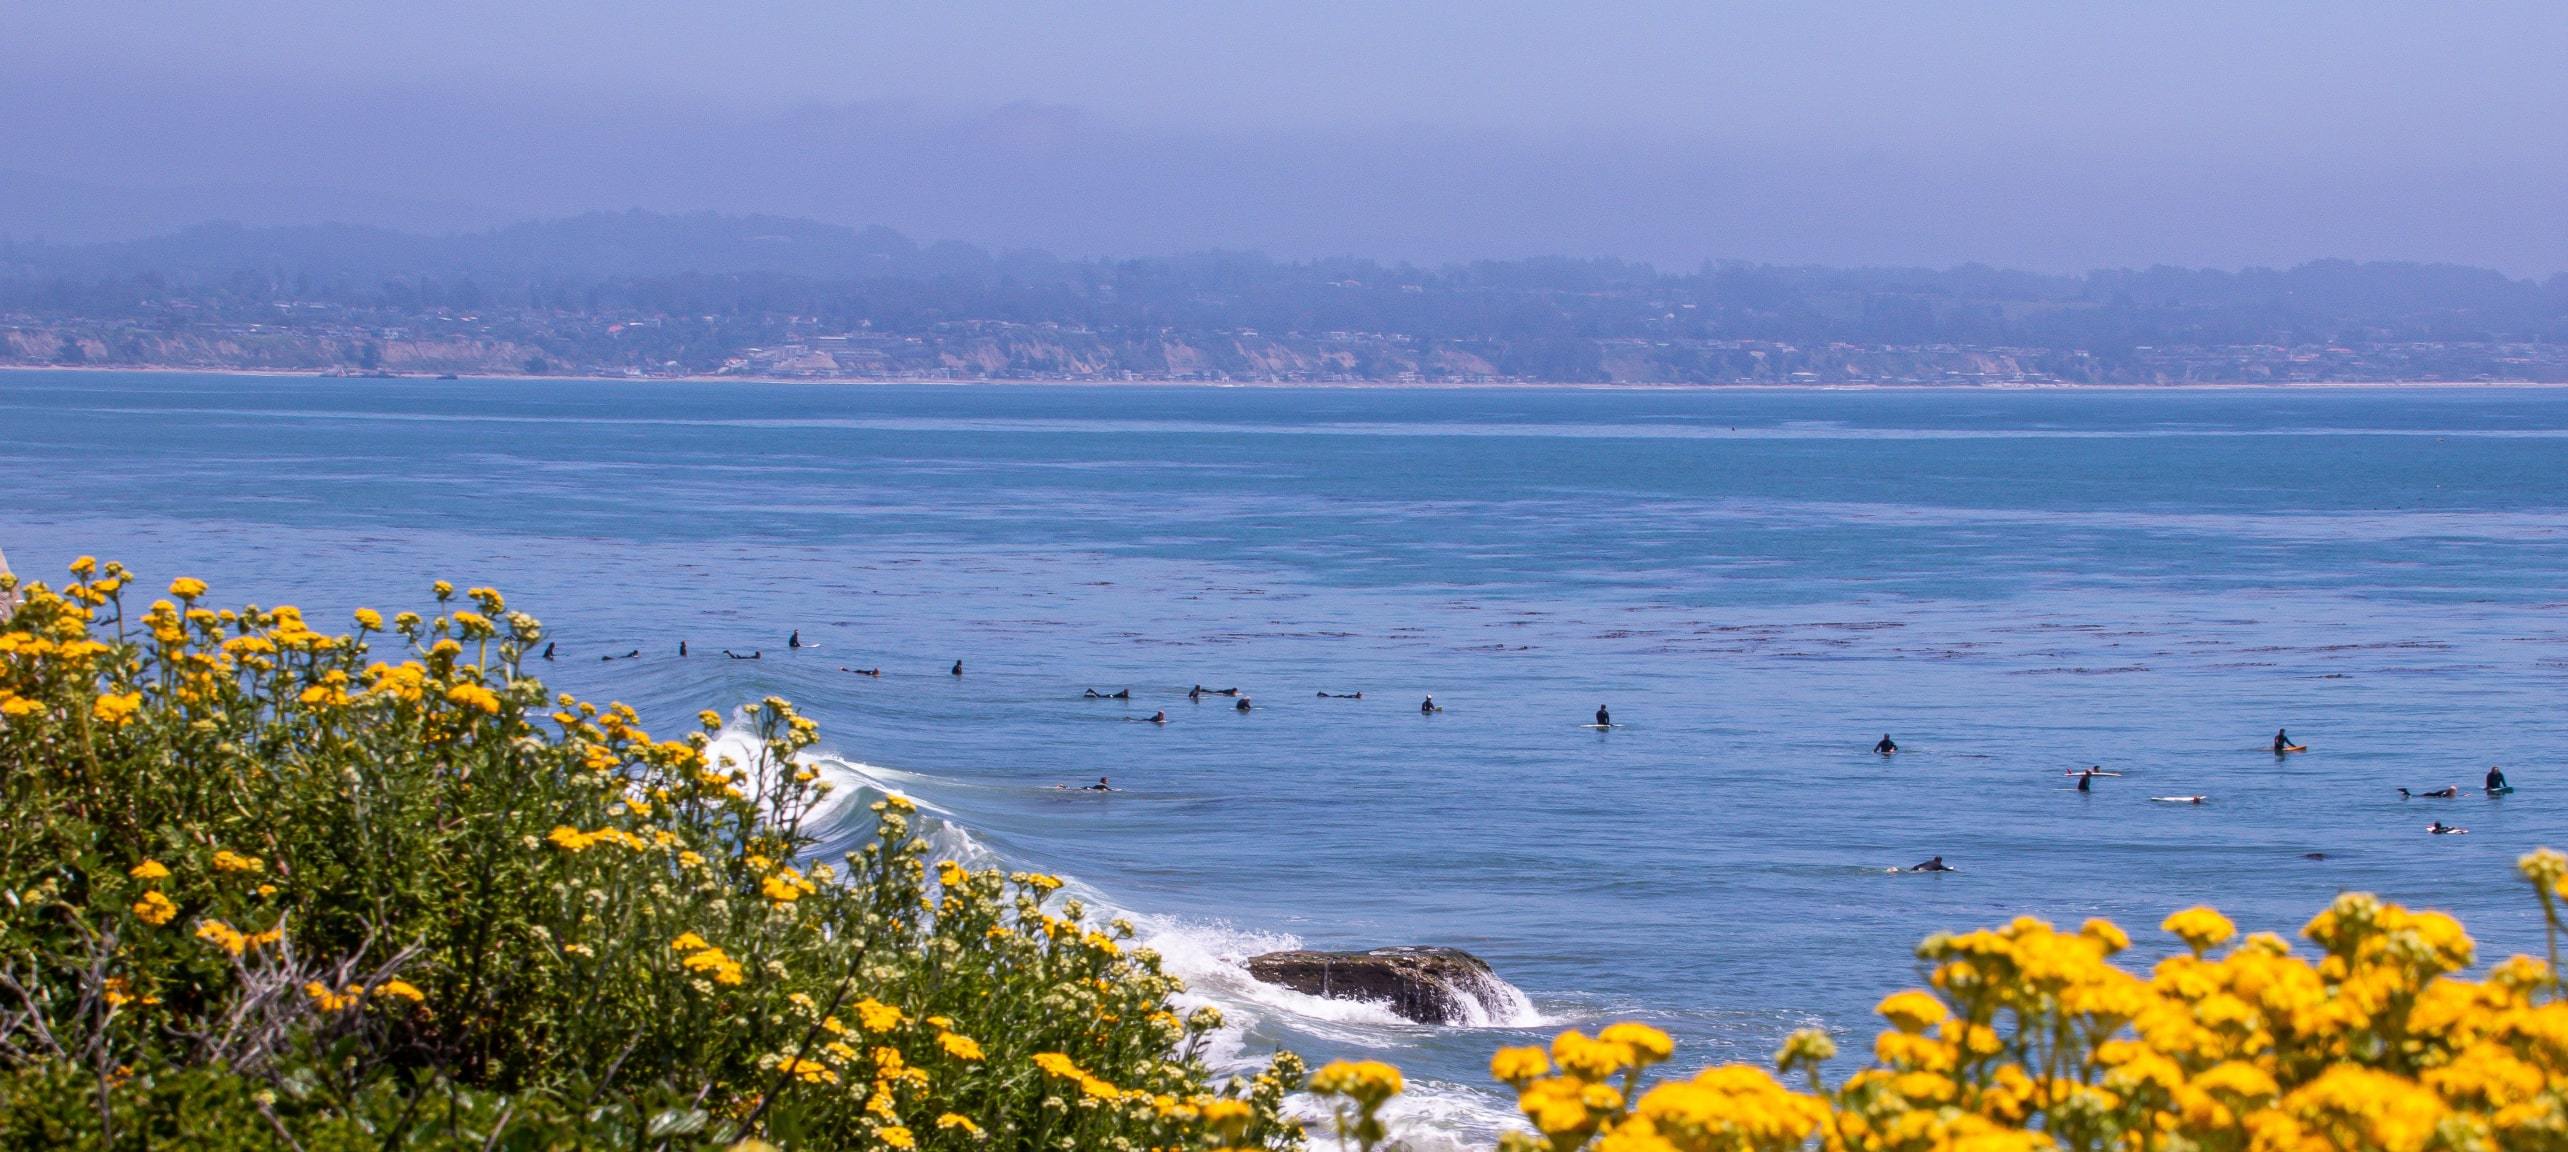 Flowers on cliffs overlooking surfers near Santa Cruz, CA